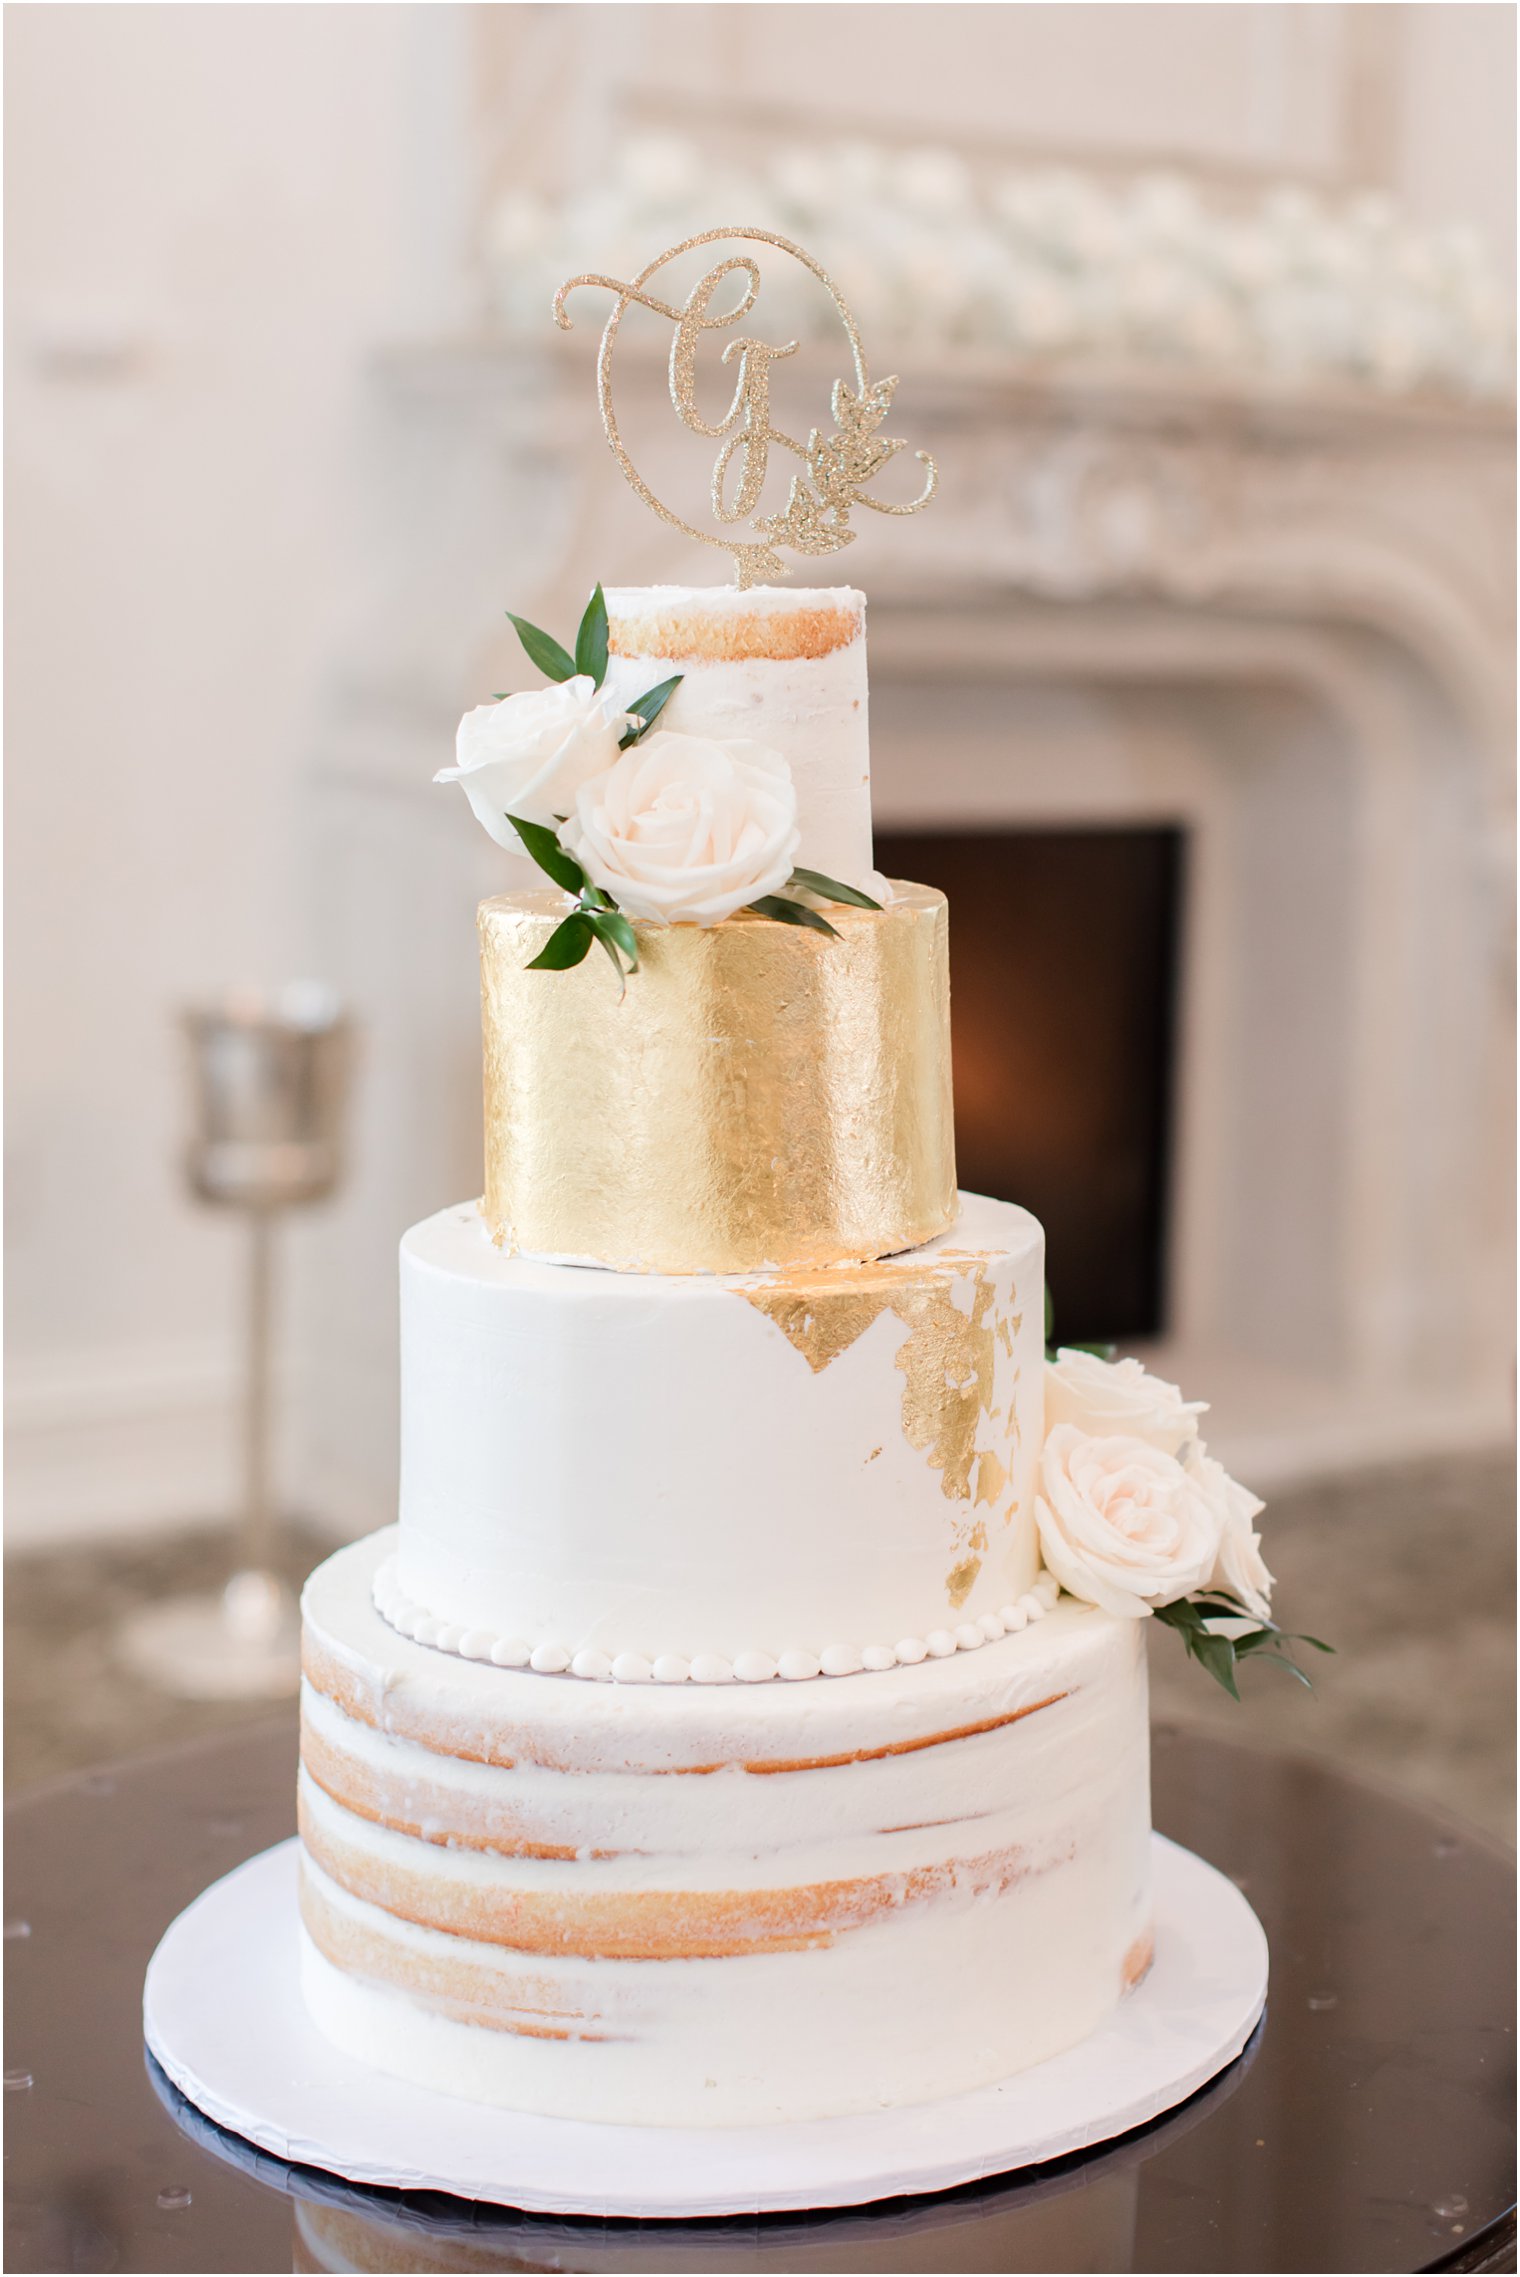 Gold wedding cake from Bruno's Bakery